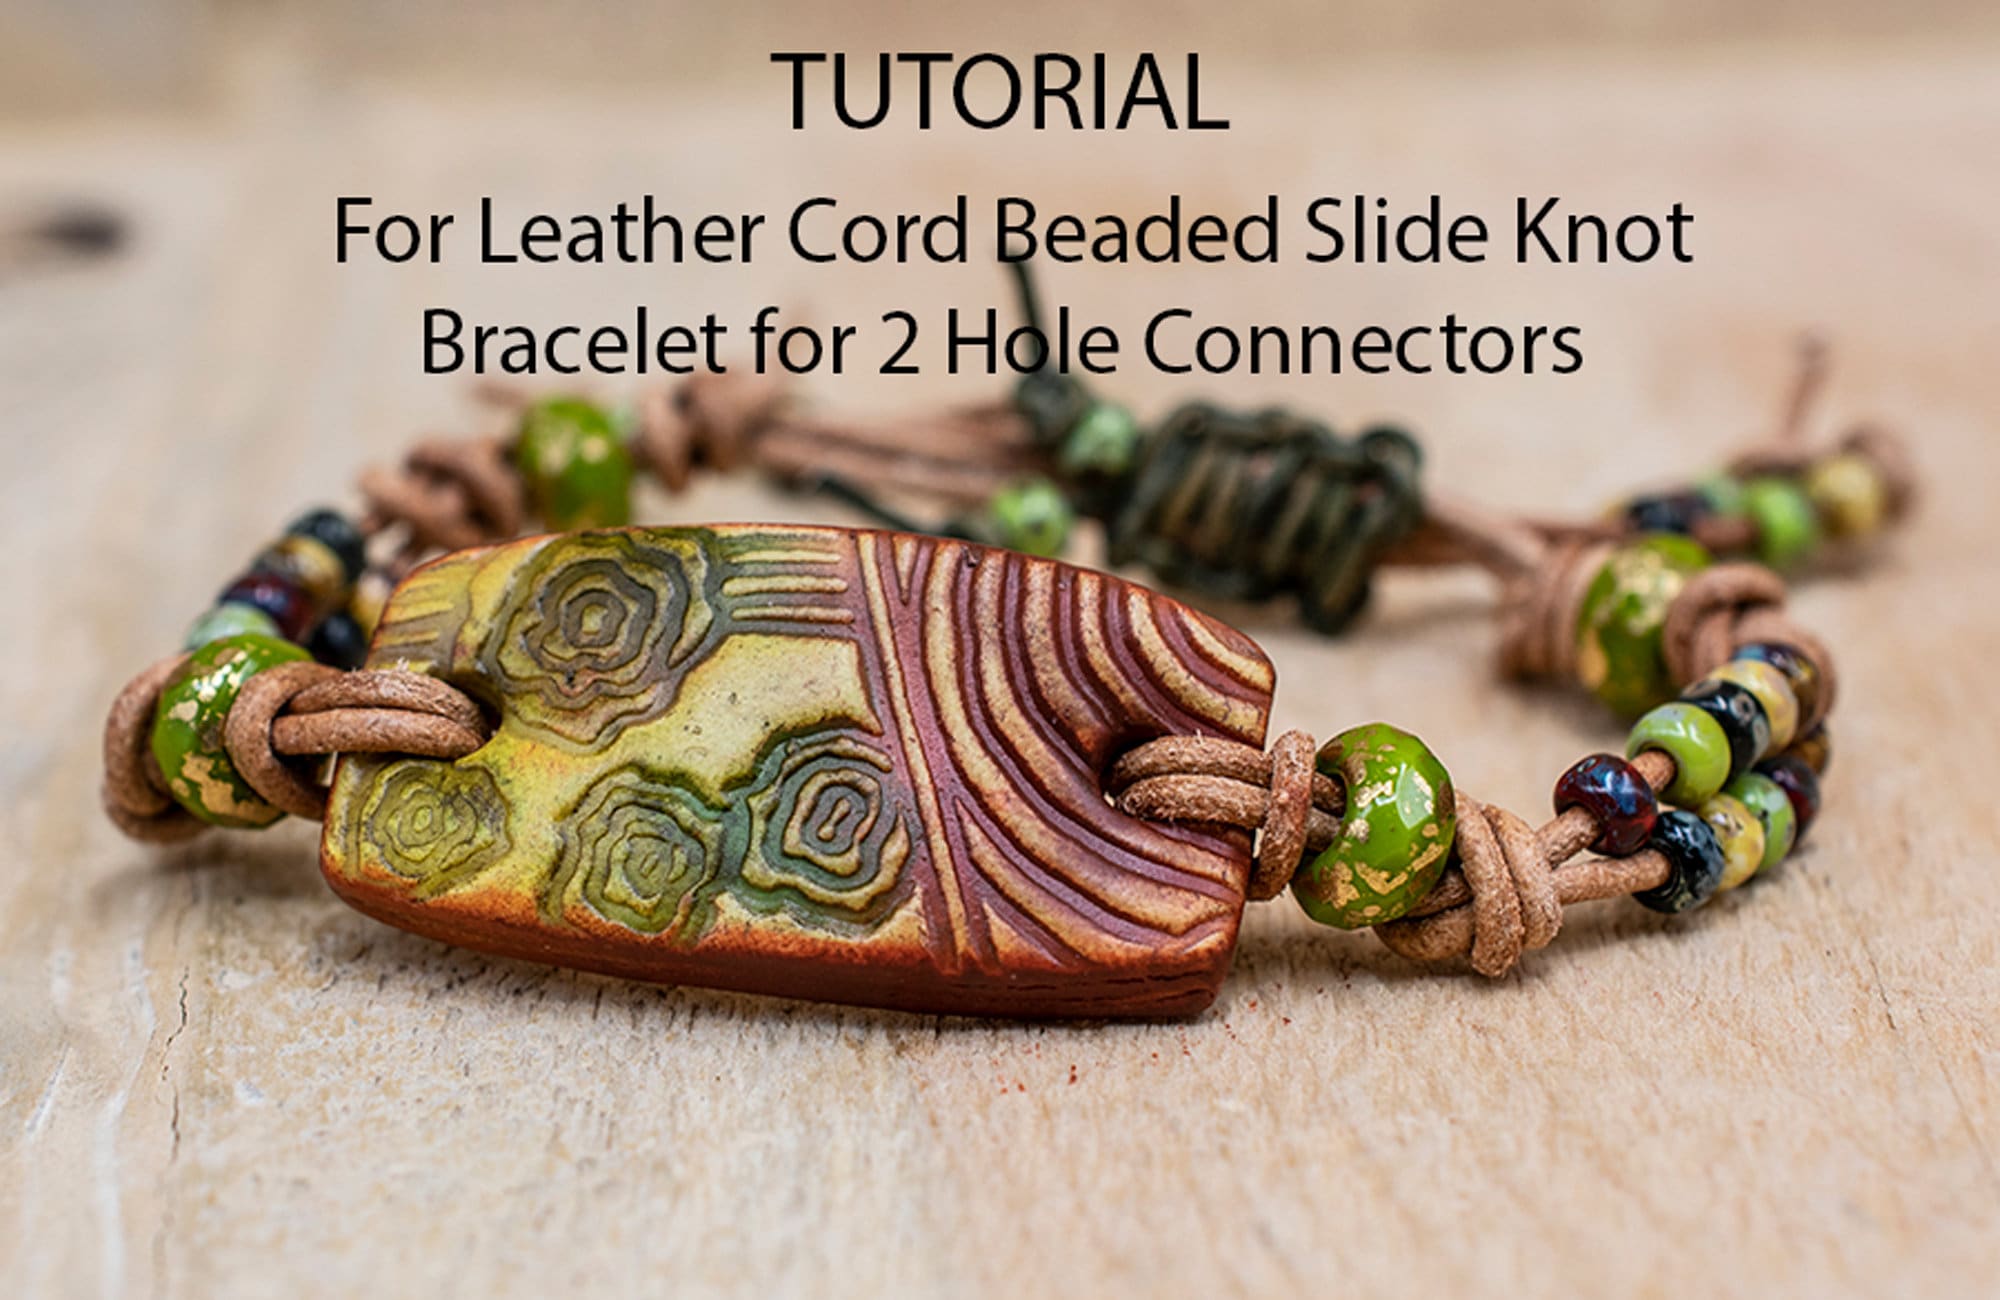 Mixed Bead Colors DIY Bracelet Kit Zigzag Bracelet Vacation Mode Friendship  Bracelet Crafts for Adults Birthday Gift Idea Crafts for Retreat 